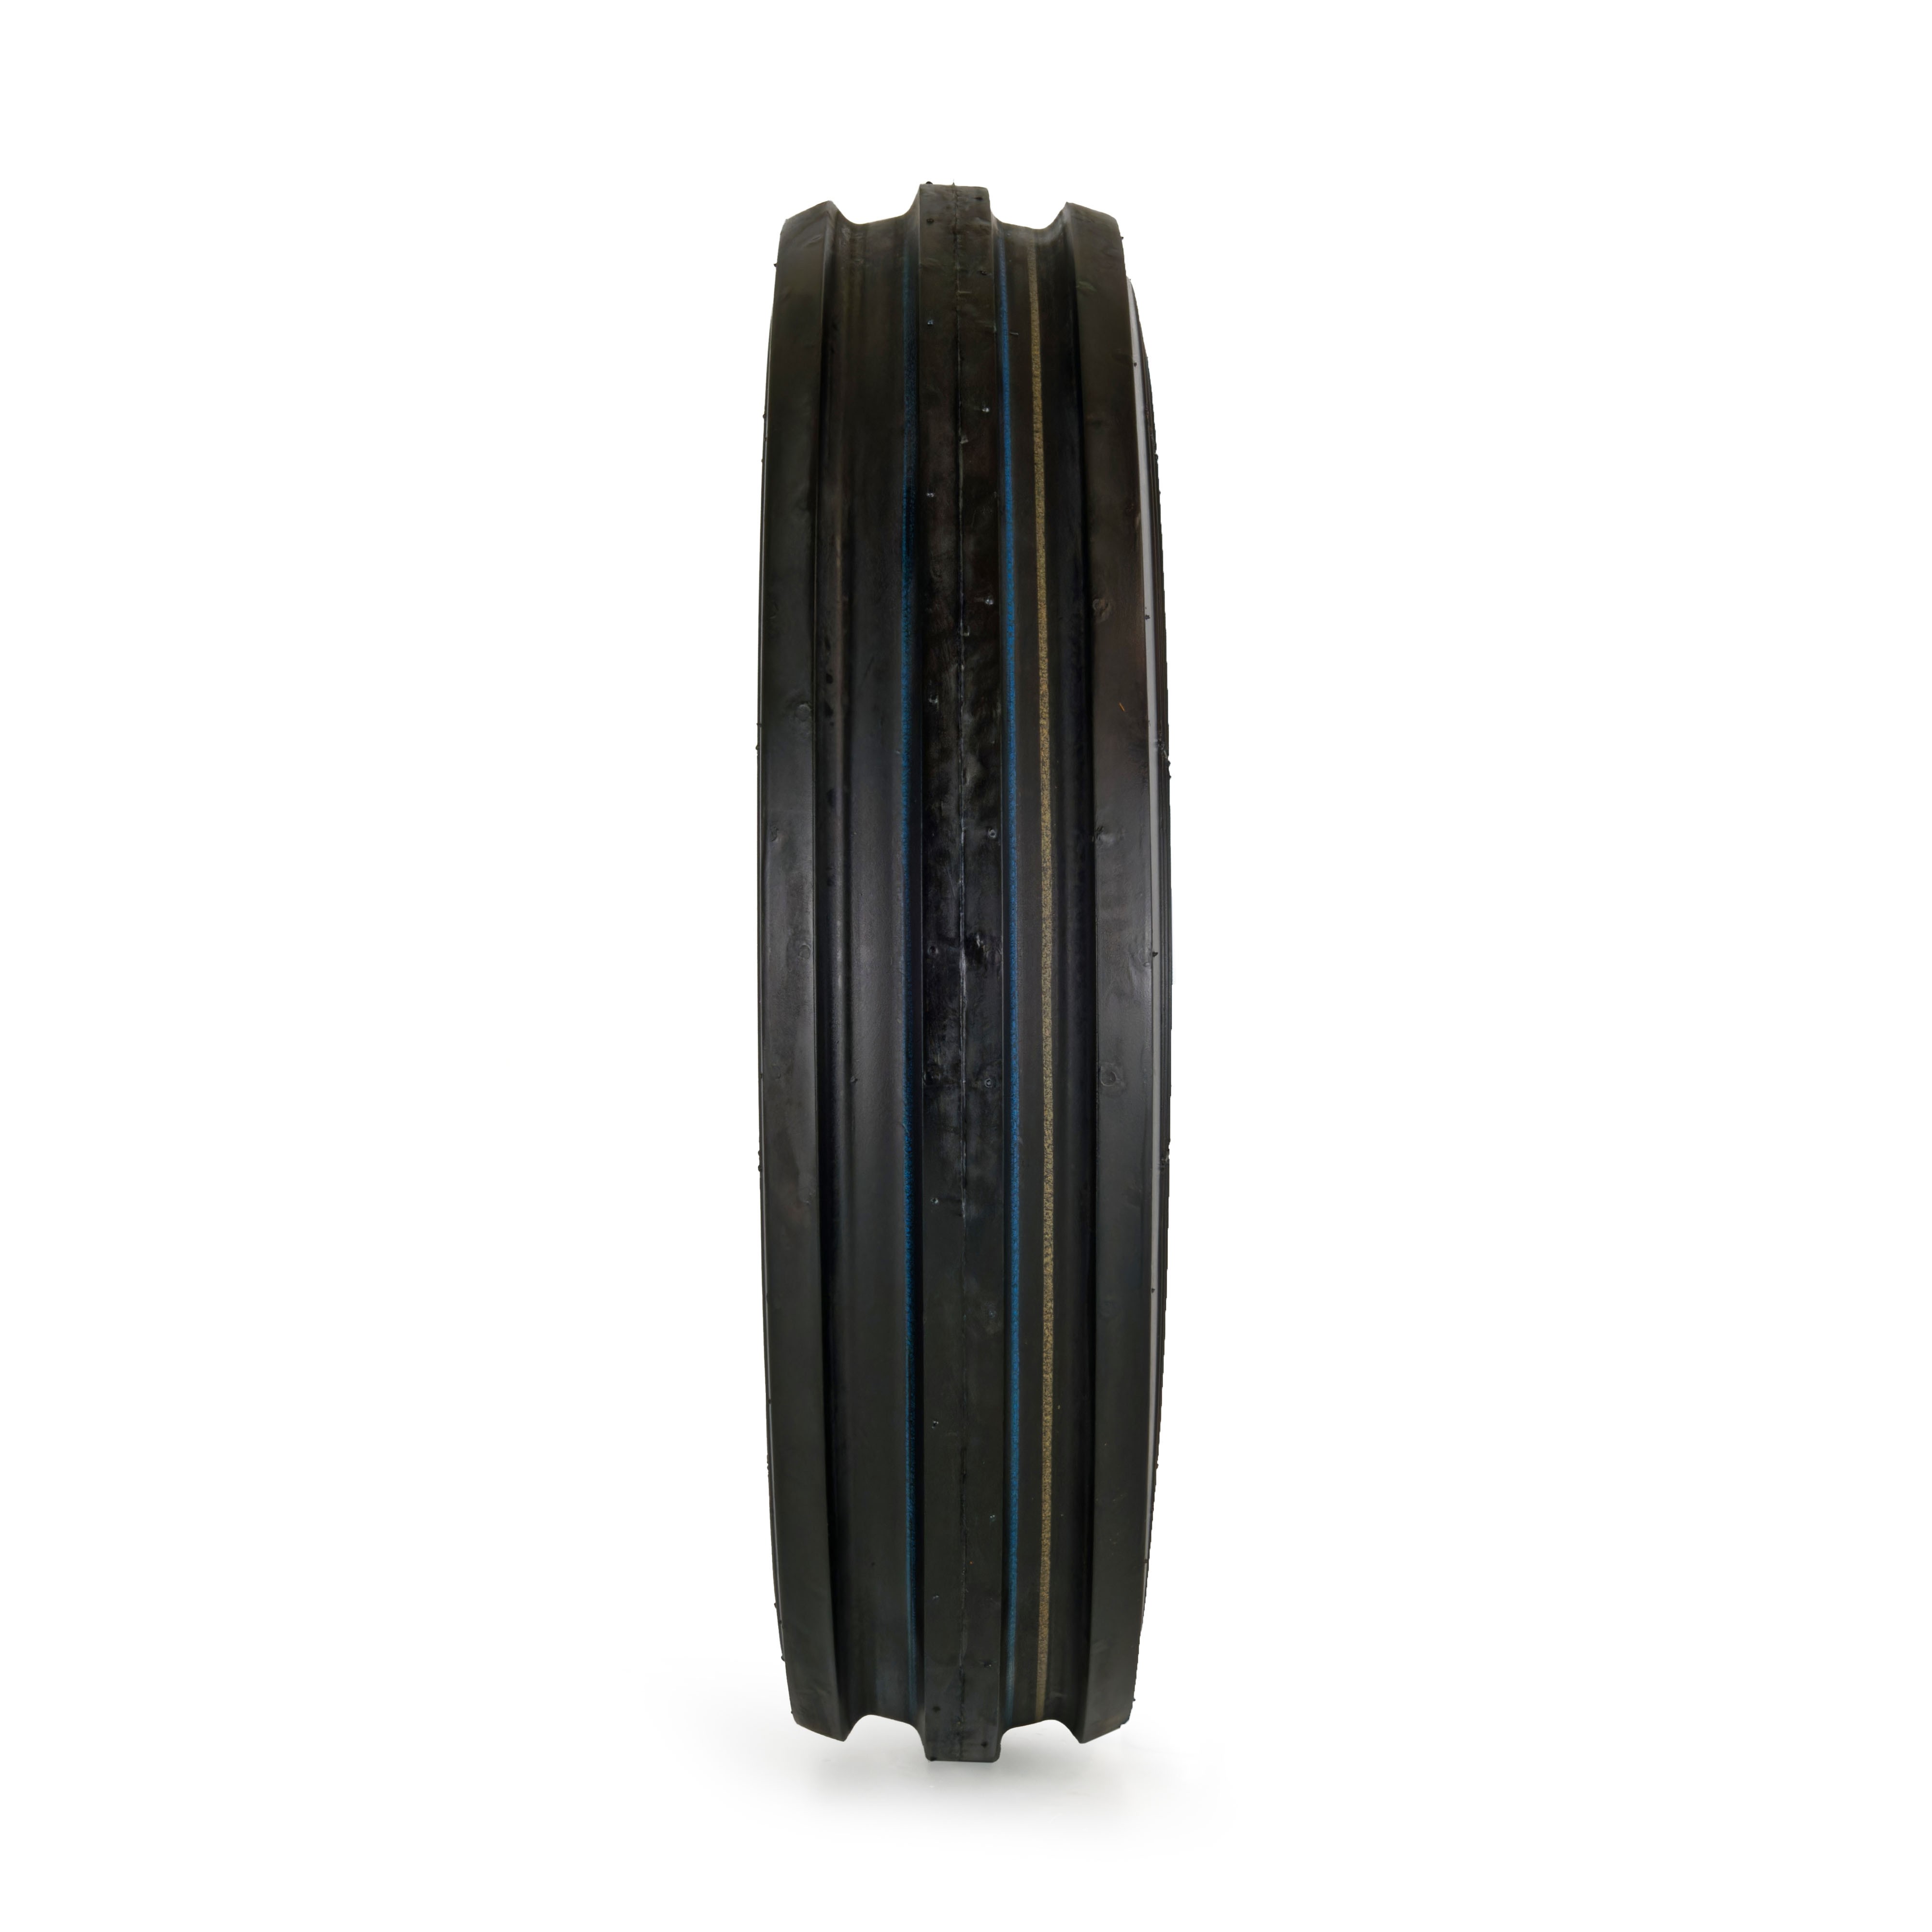 Kreisler-Reifen 4.00-4, 4PR, TT, Kenda K406, 3-Rib - Profilansicht